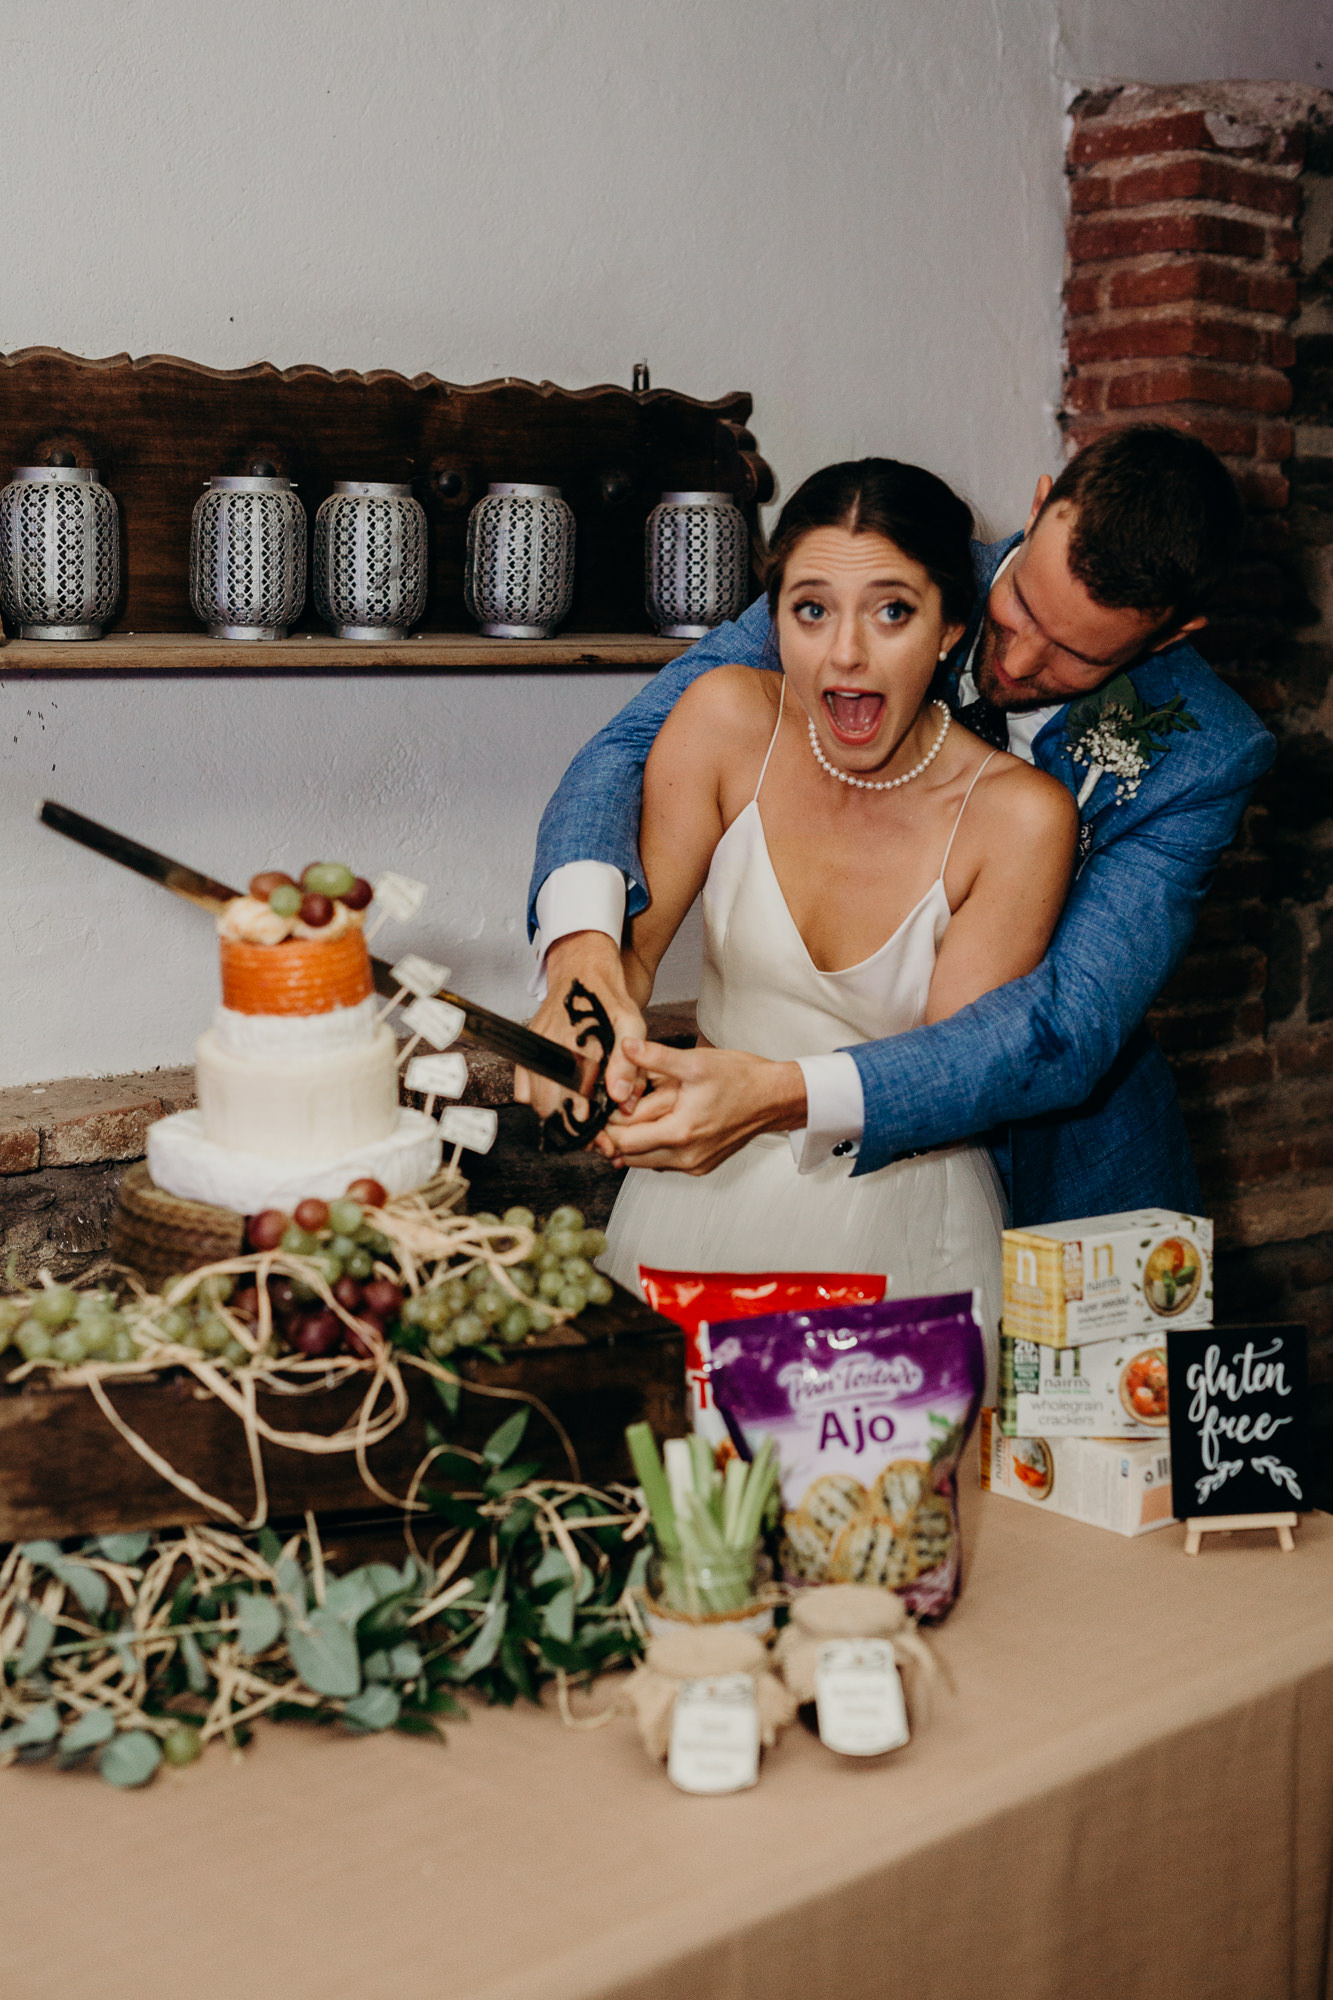 a bride and groom cut their cheese wedding cake at casa de los bates in nerja, spain